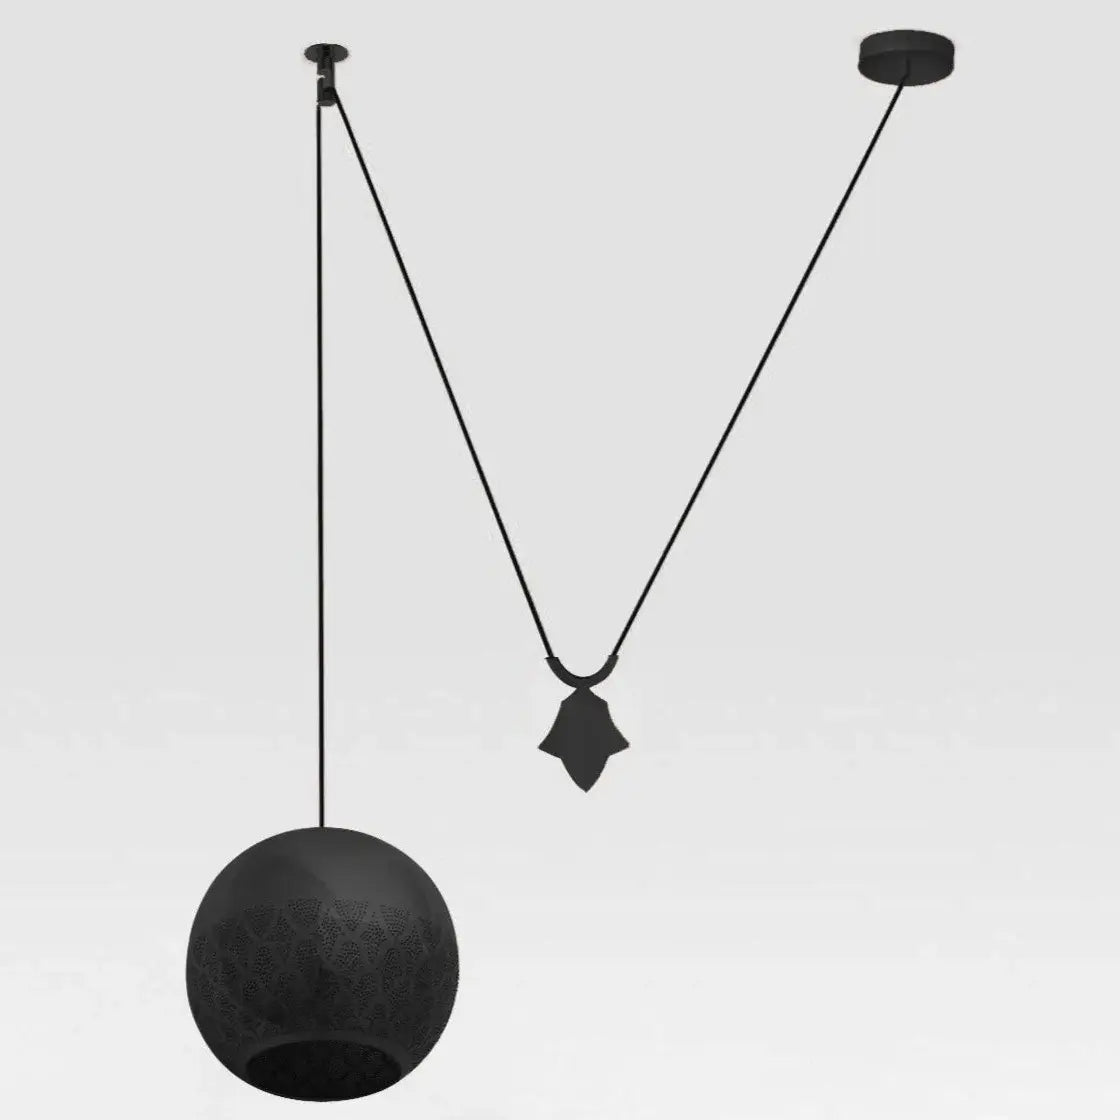 Dounia home Pendant light in black   made of Metal, Model: Nur reversed counterbalance